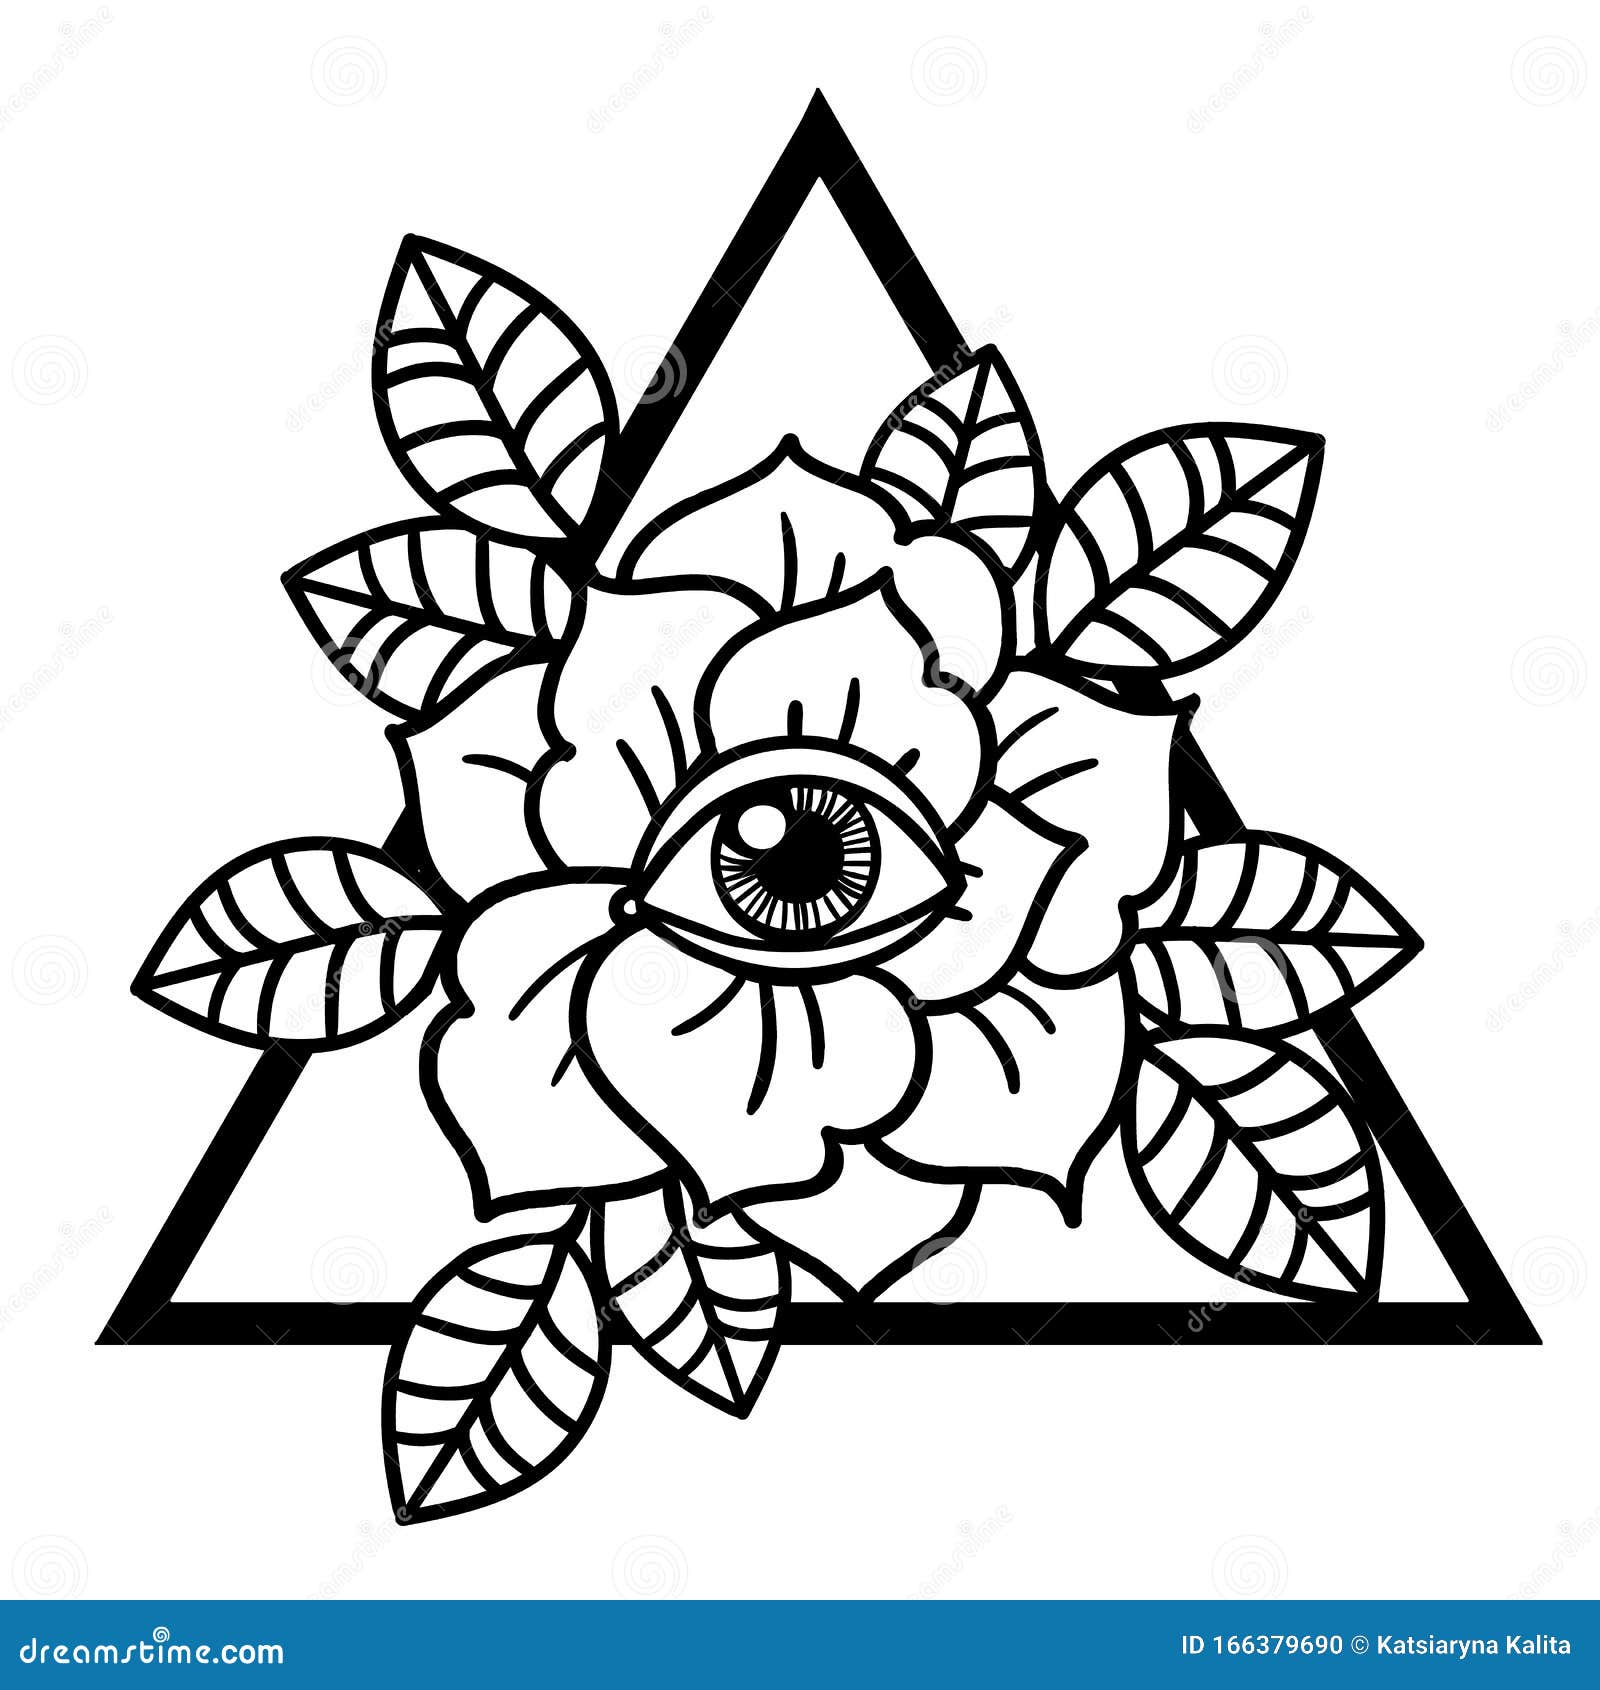 STUDIOBYSOLZEE on Instagram Flower framesold out  10월 예약 진행 중 입니다   Floral back tattoos Flower tattoo designs Floral tattoo design